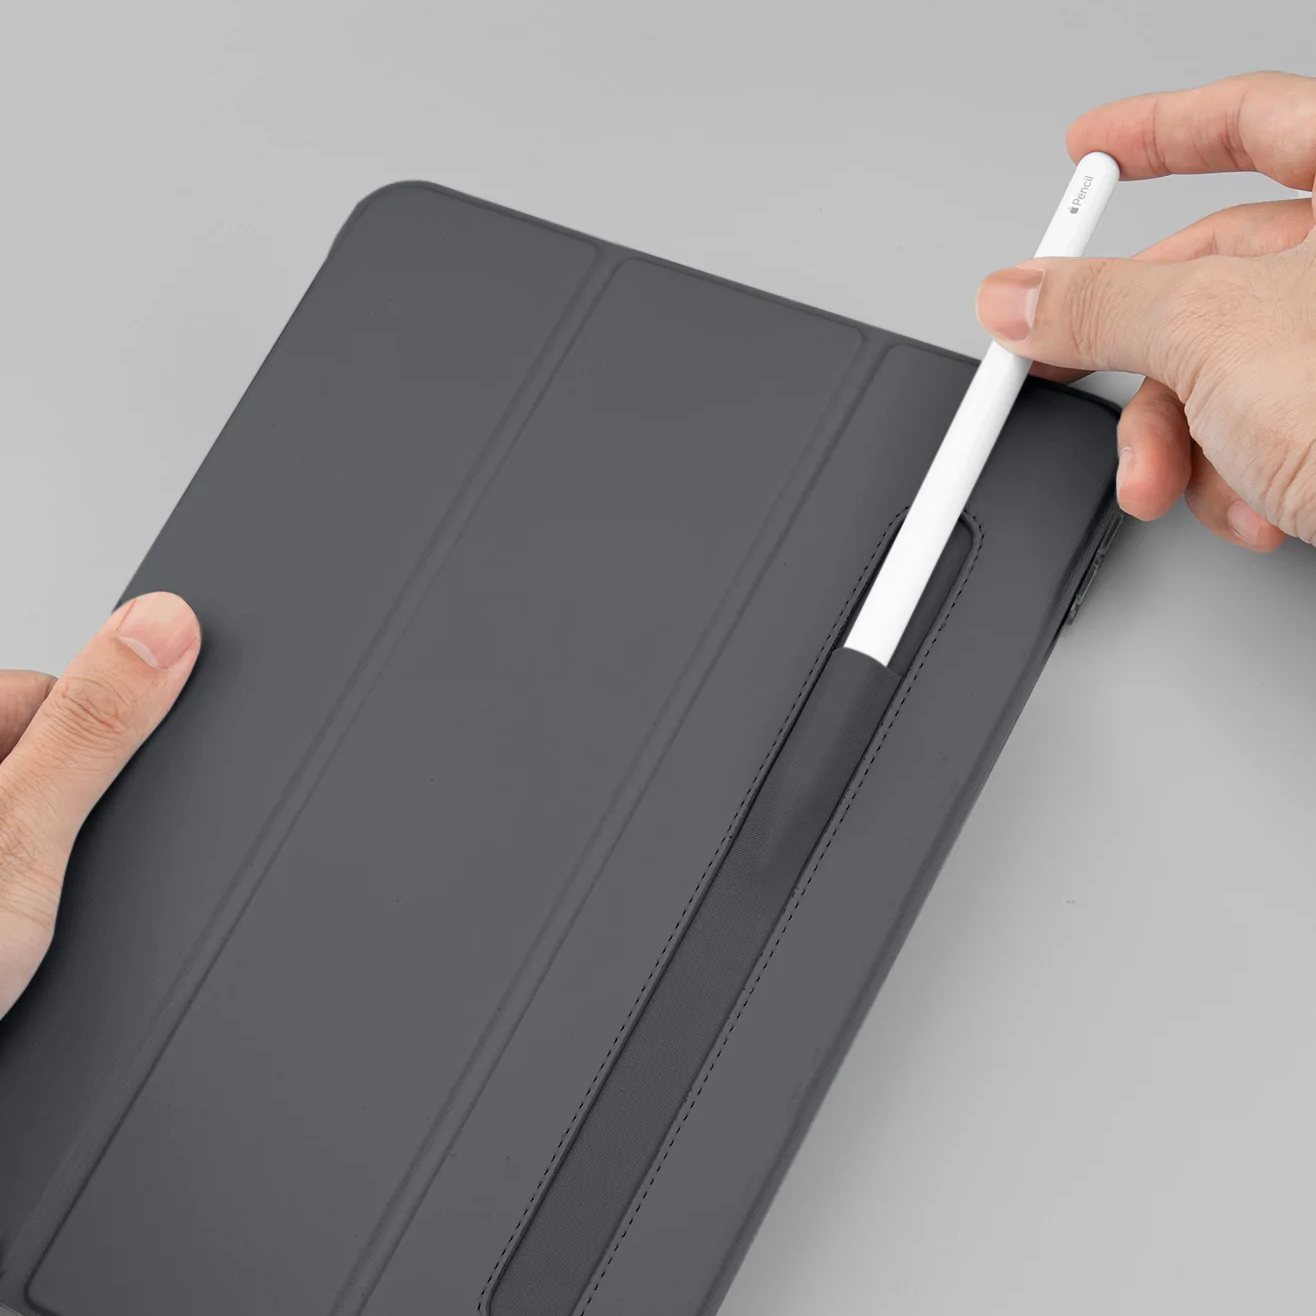 LAUT HUEX Folio 透亮 2021 iPad Pro 12.9吋 5代 含筆槽平板保護套, 海軍藍